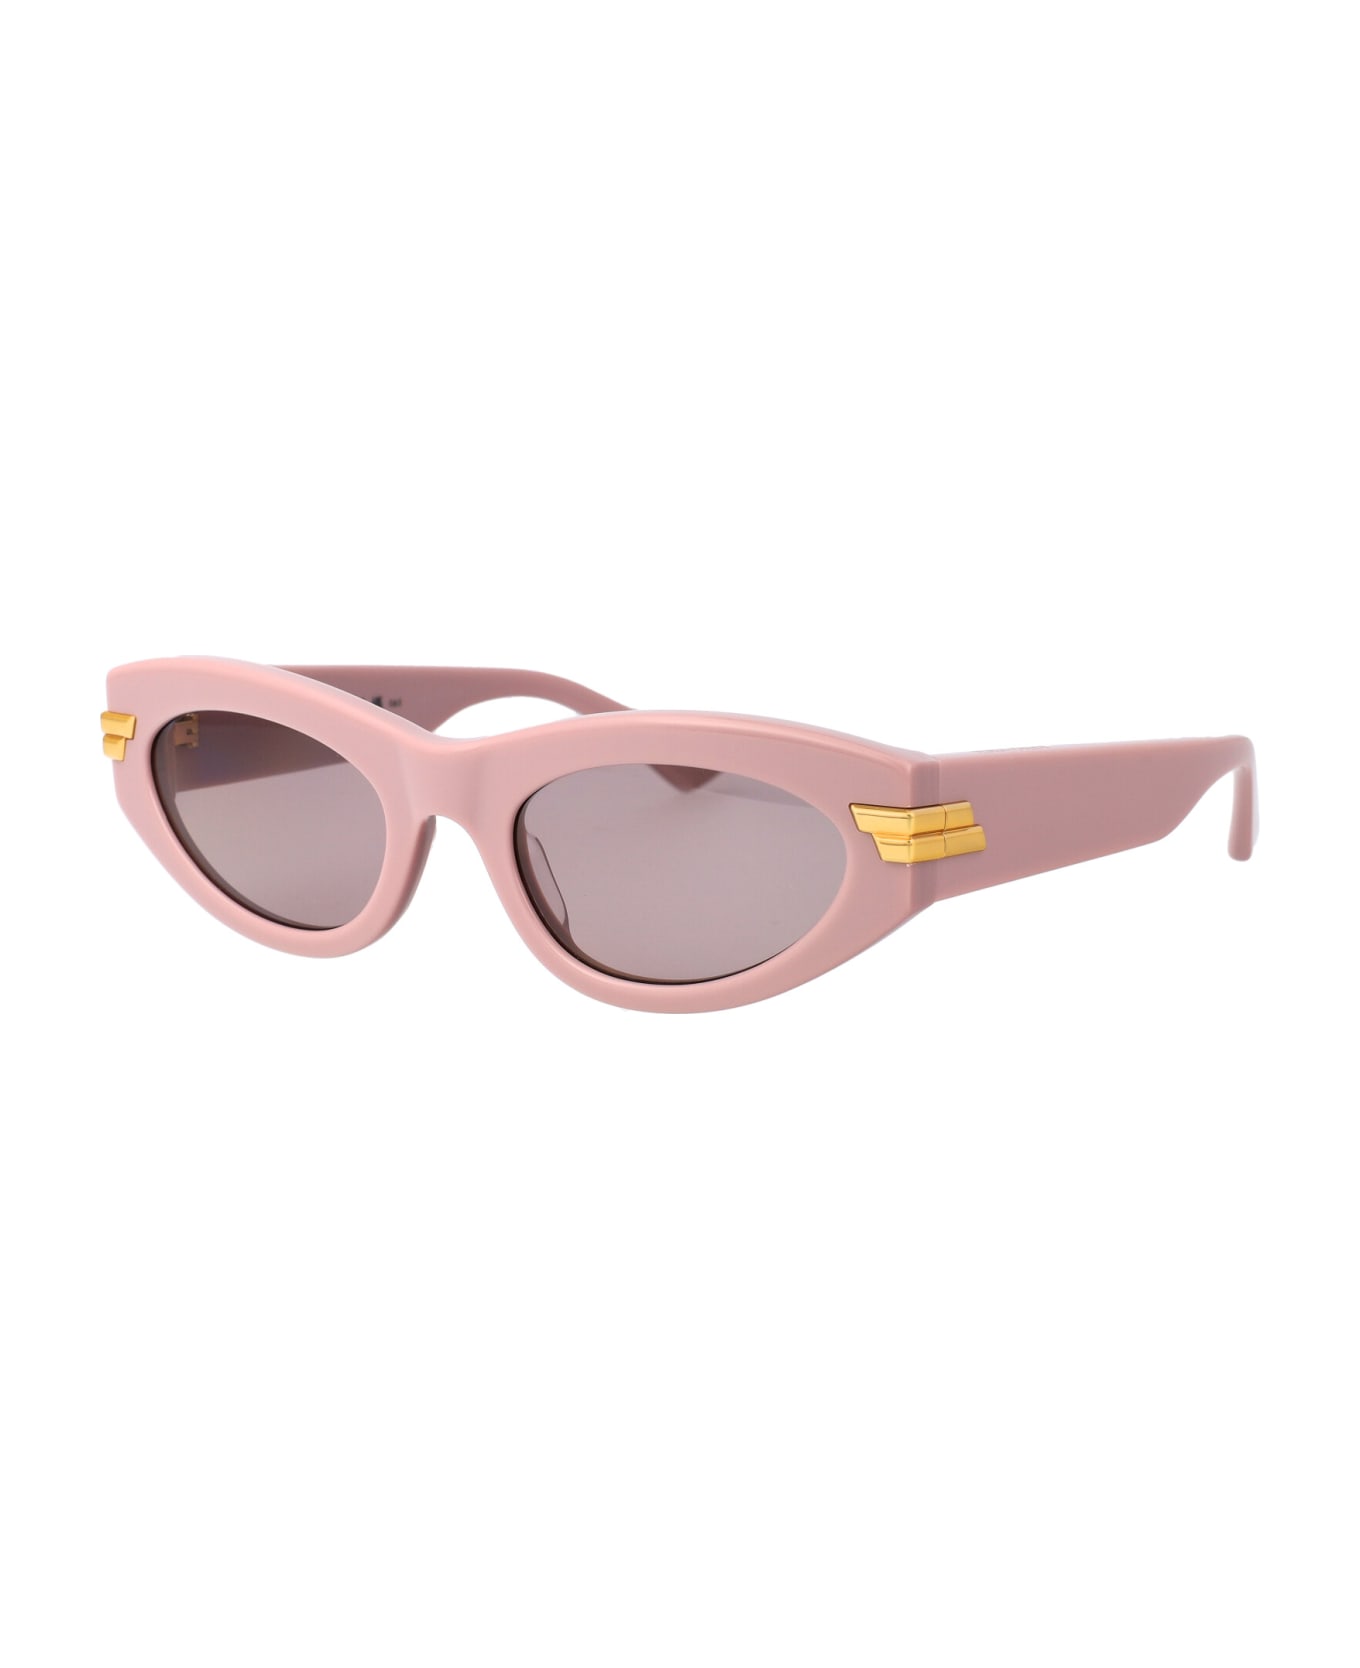 Bottega Veneta Eyewear Bv1189s Sunglasses - 006 PINK PINK VIOLET